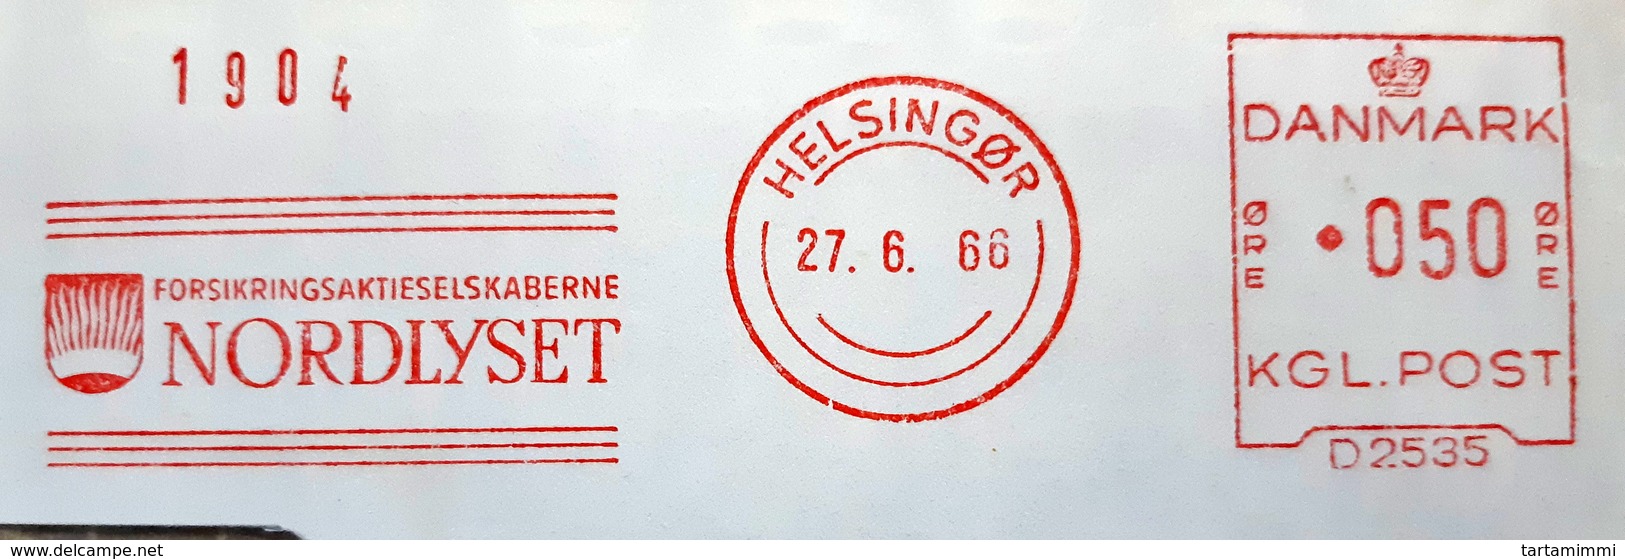 EMA AFS METER STAMP FREISTEMPEL - DANMARK HELSINGØR 1966 NORDLYSET SUNSHINE SUNSET SUN SOLEIL - Maschinenstempel (EMA)